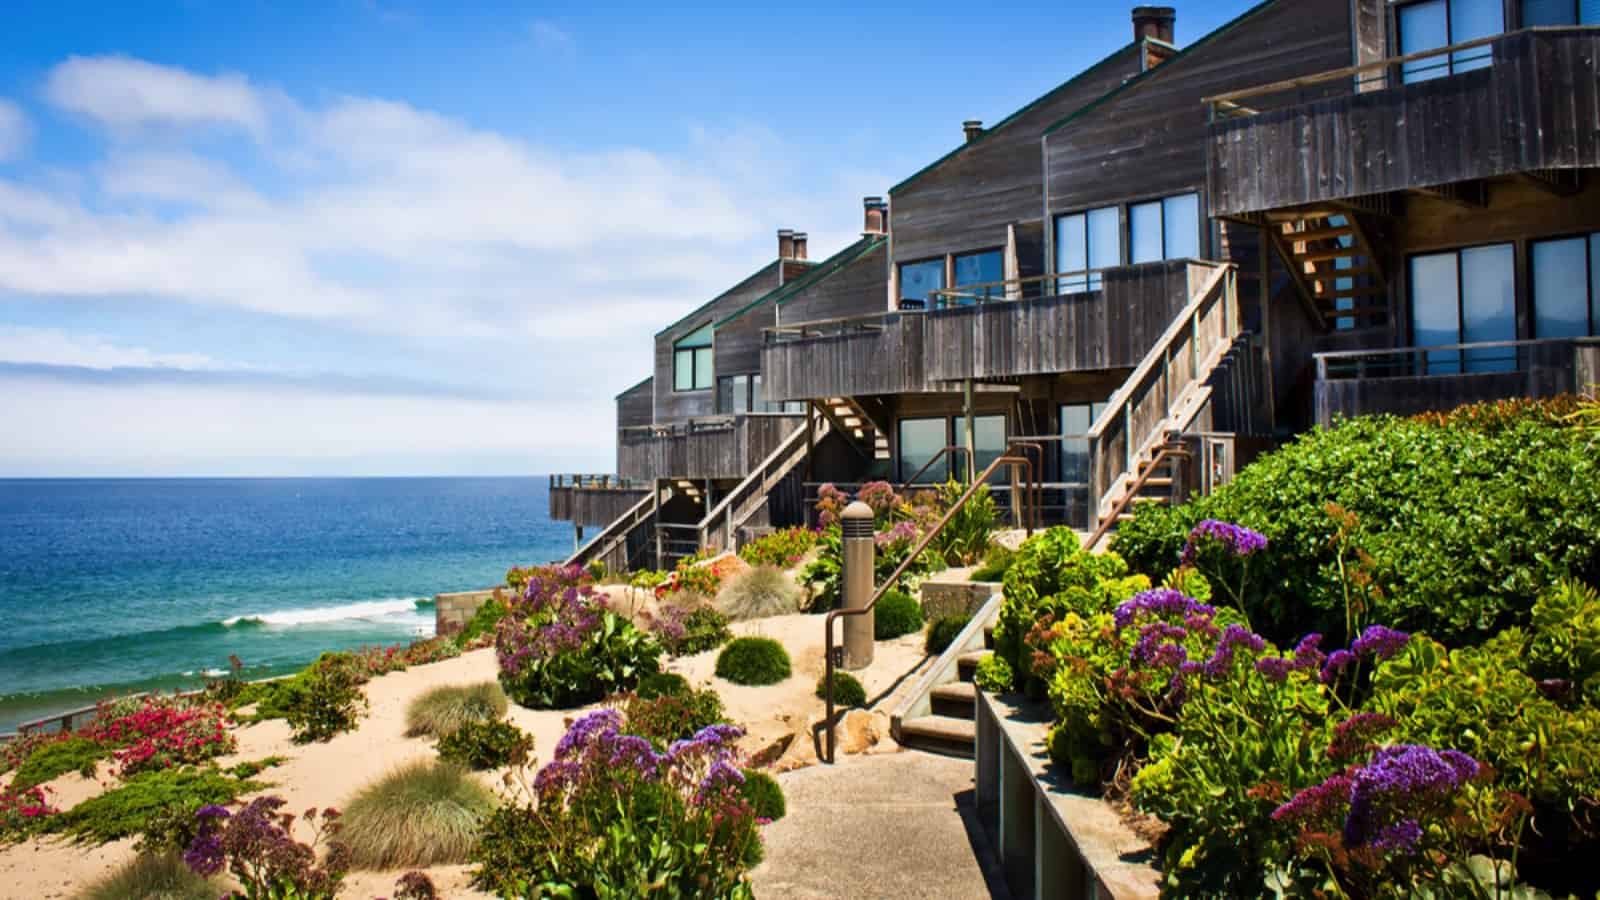 Beachside house along california coastline